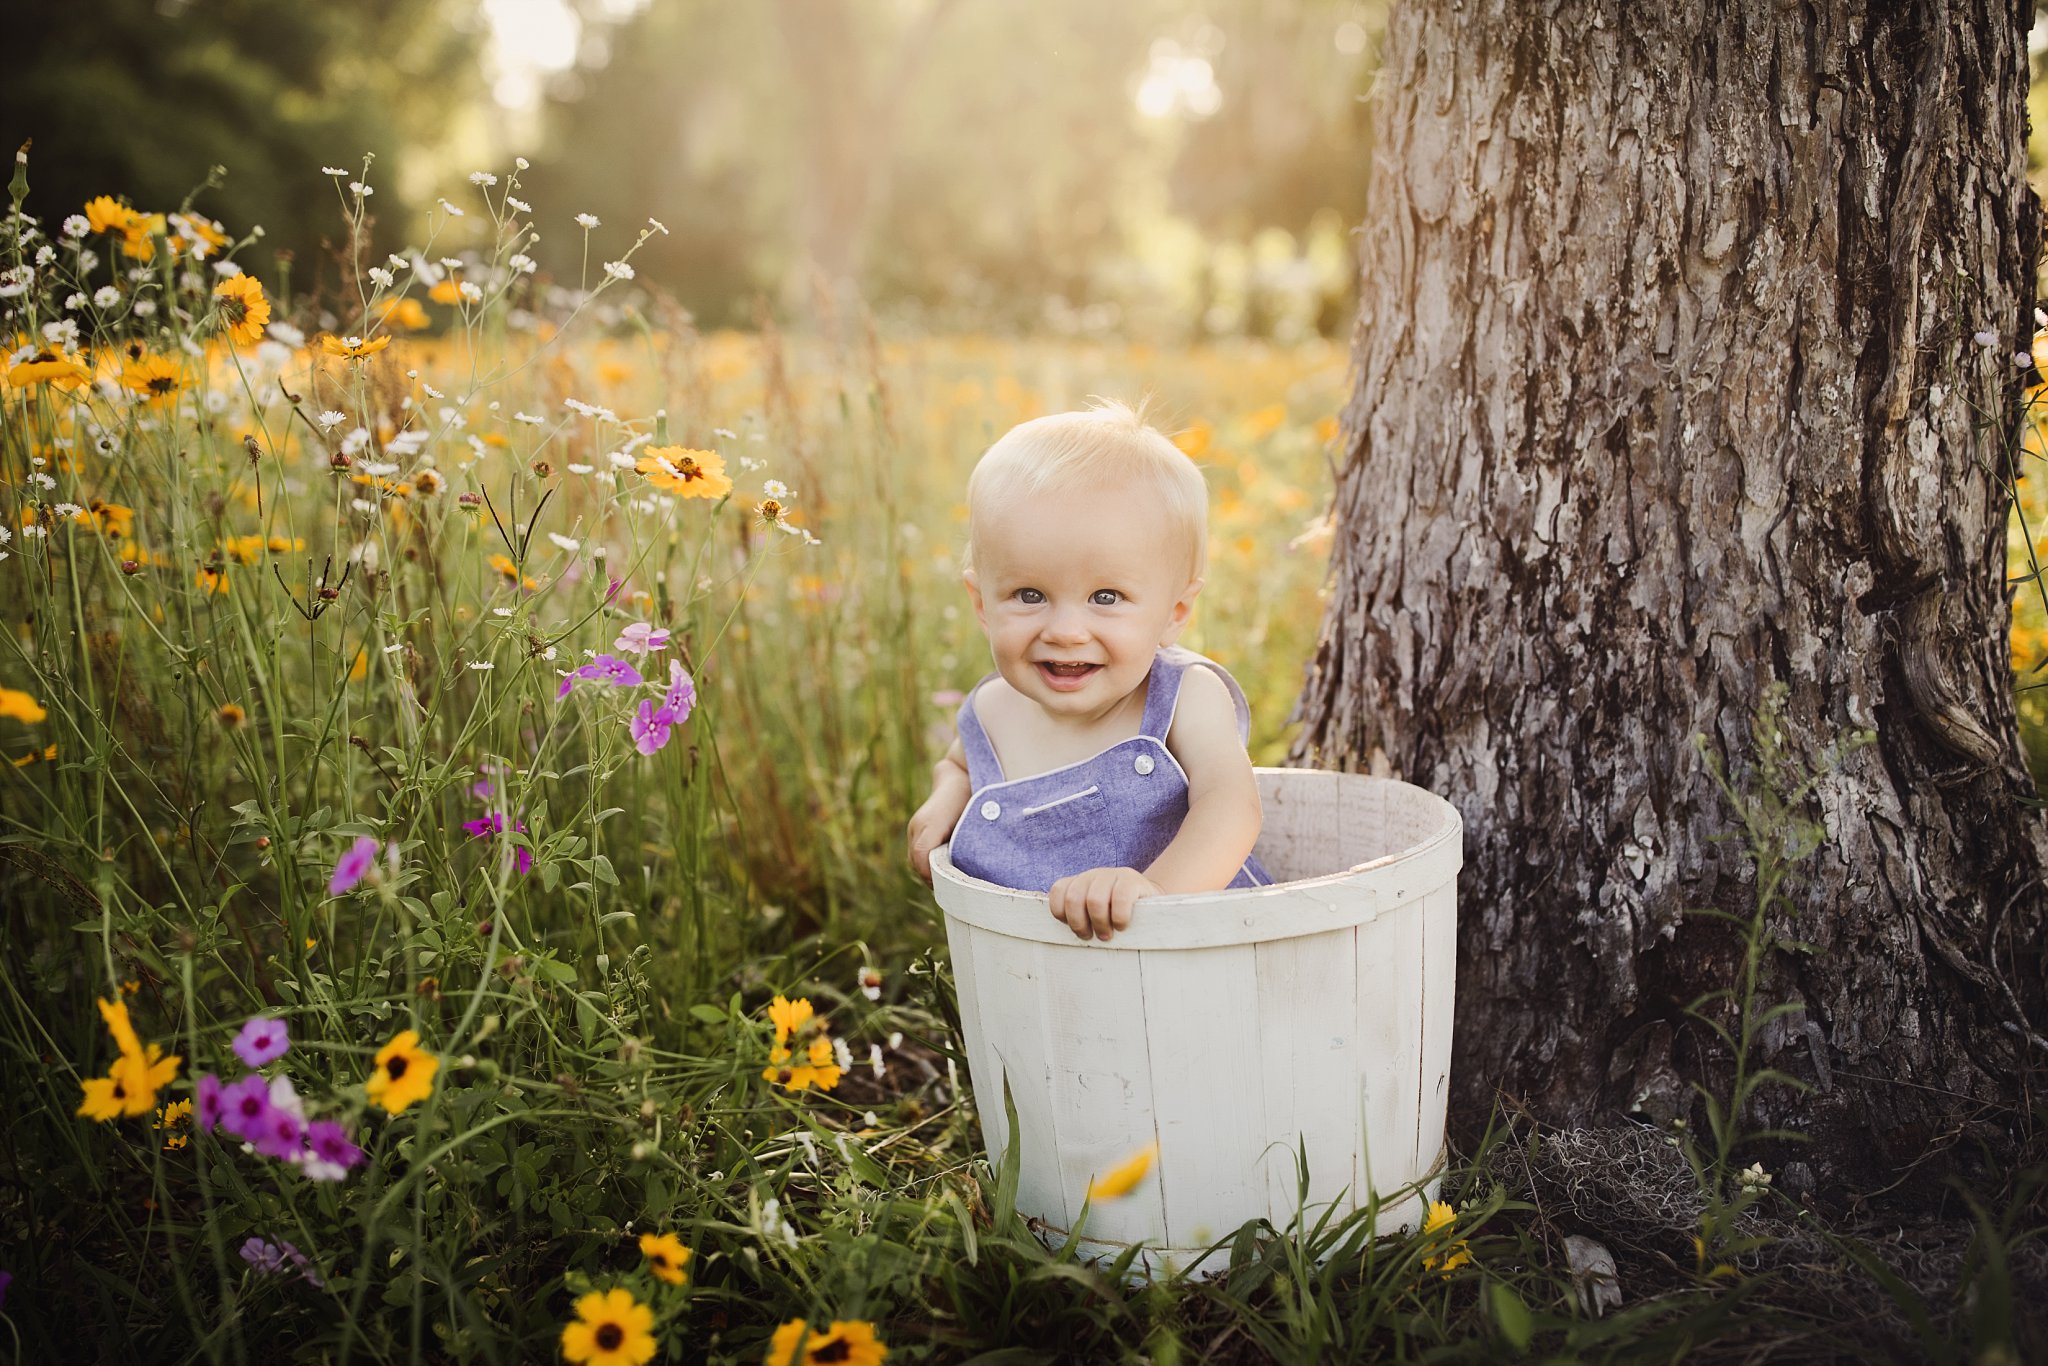 NE FL Family Photography adorable blonde baby boy in rustic basket by tree in flower field